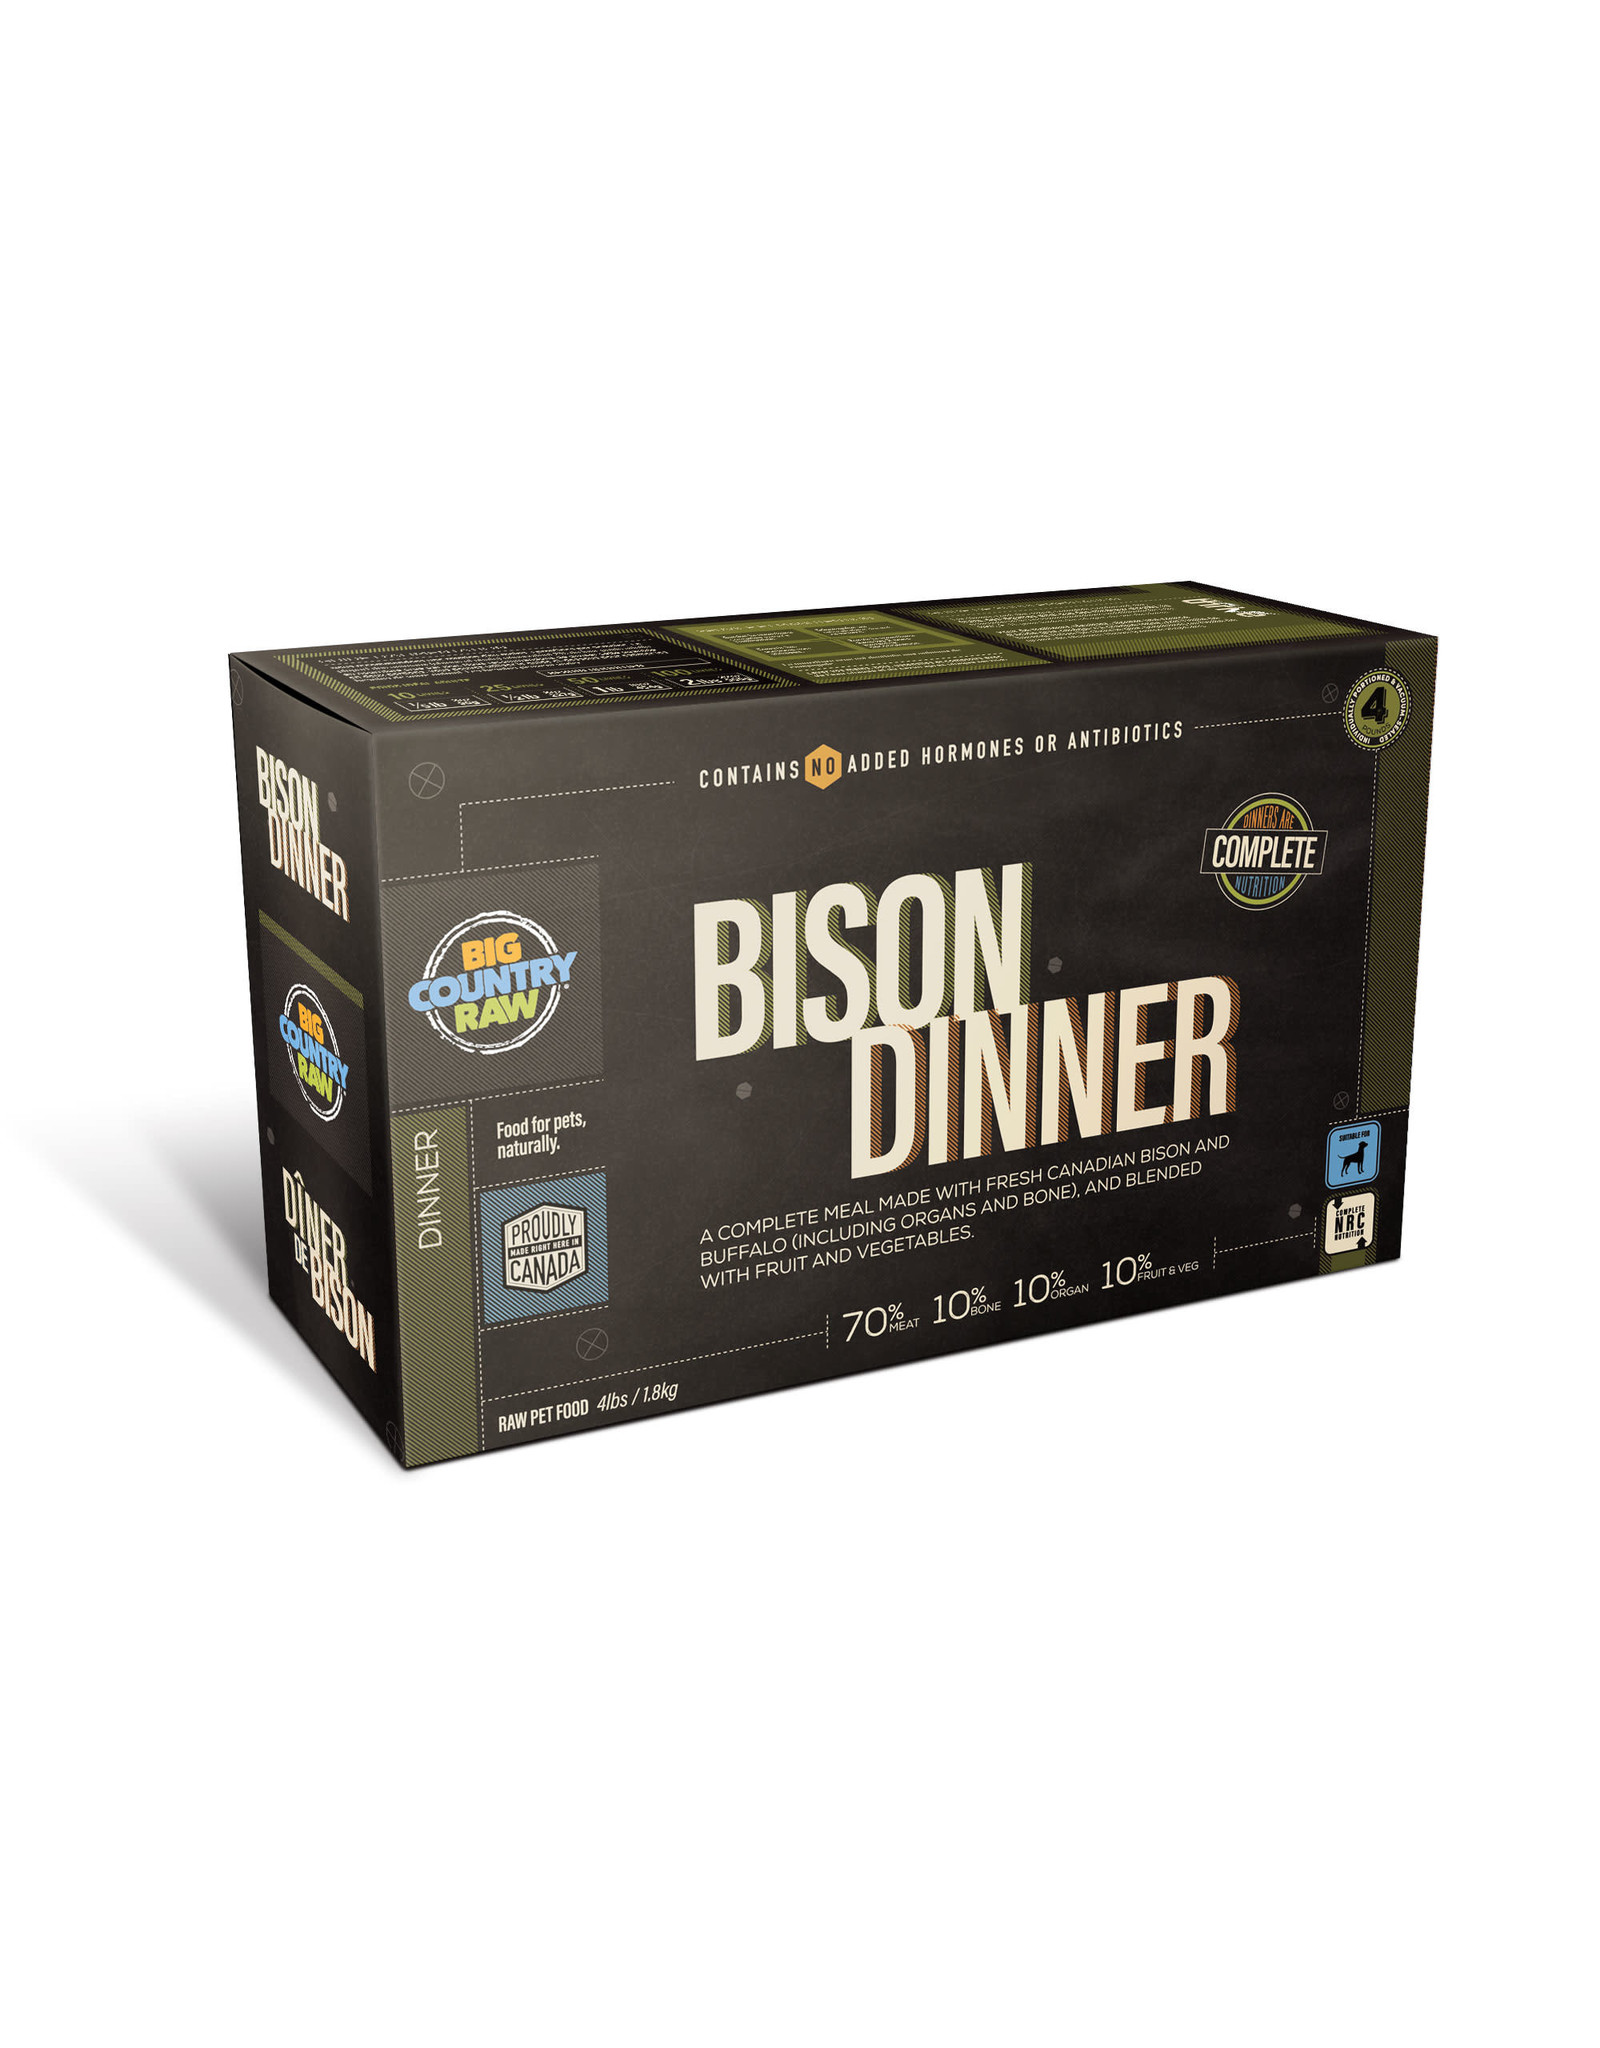 Big Country Raw BCR - Bison Dinner Carton, 4lb